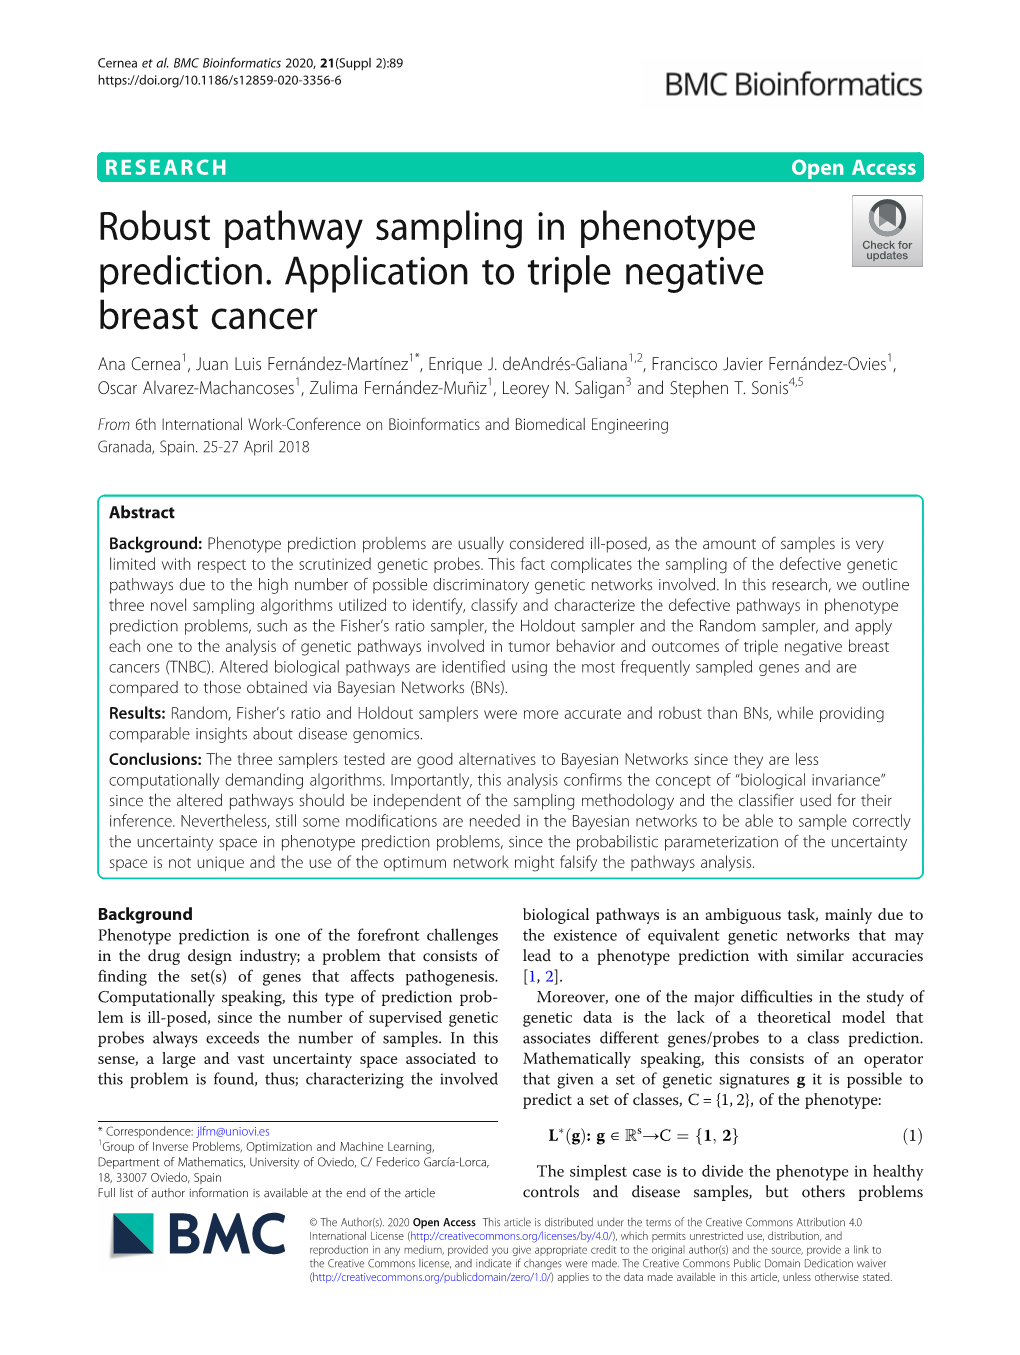 Robust Pathway Sampling in Phenotype Prediction. Application to Triple Negative Breast Cancer Ana Cernea1, Juan Luis Fernández-Martínez1*, Enrique J